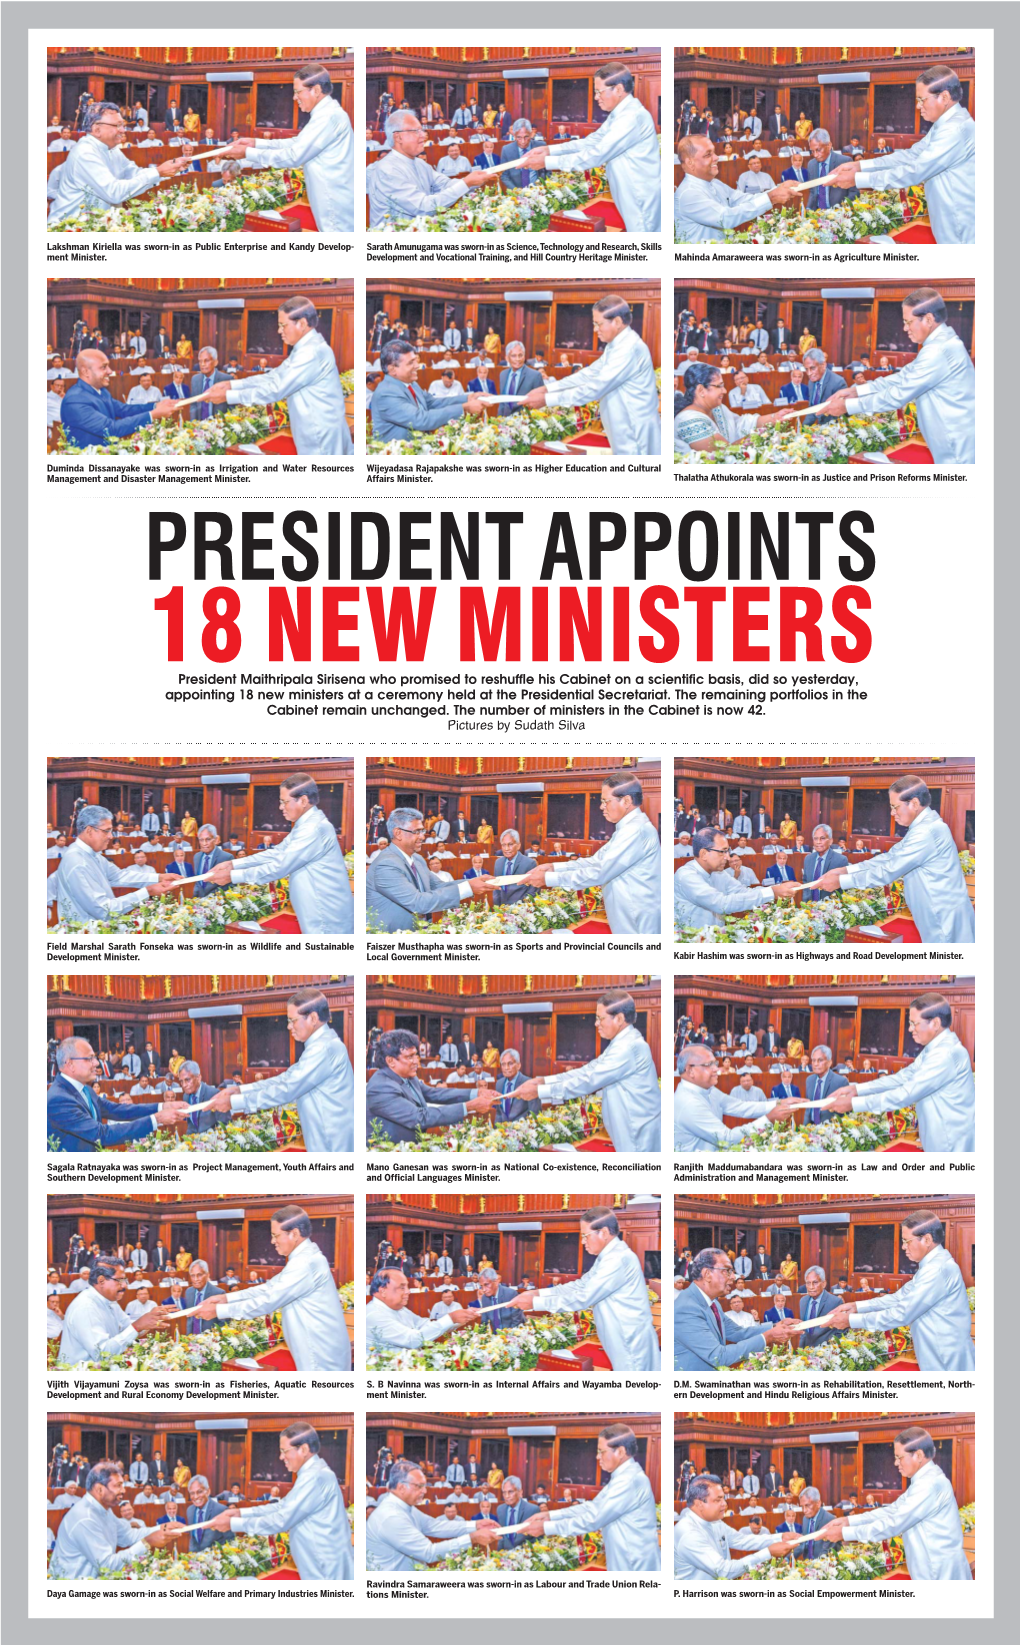 President Maithripala Sirisena Who Promised to Reshuffle His Cabinet